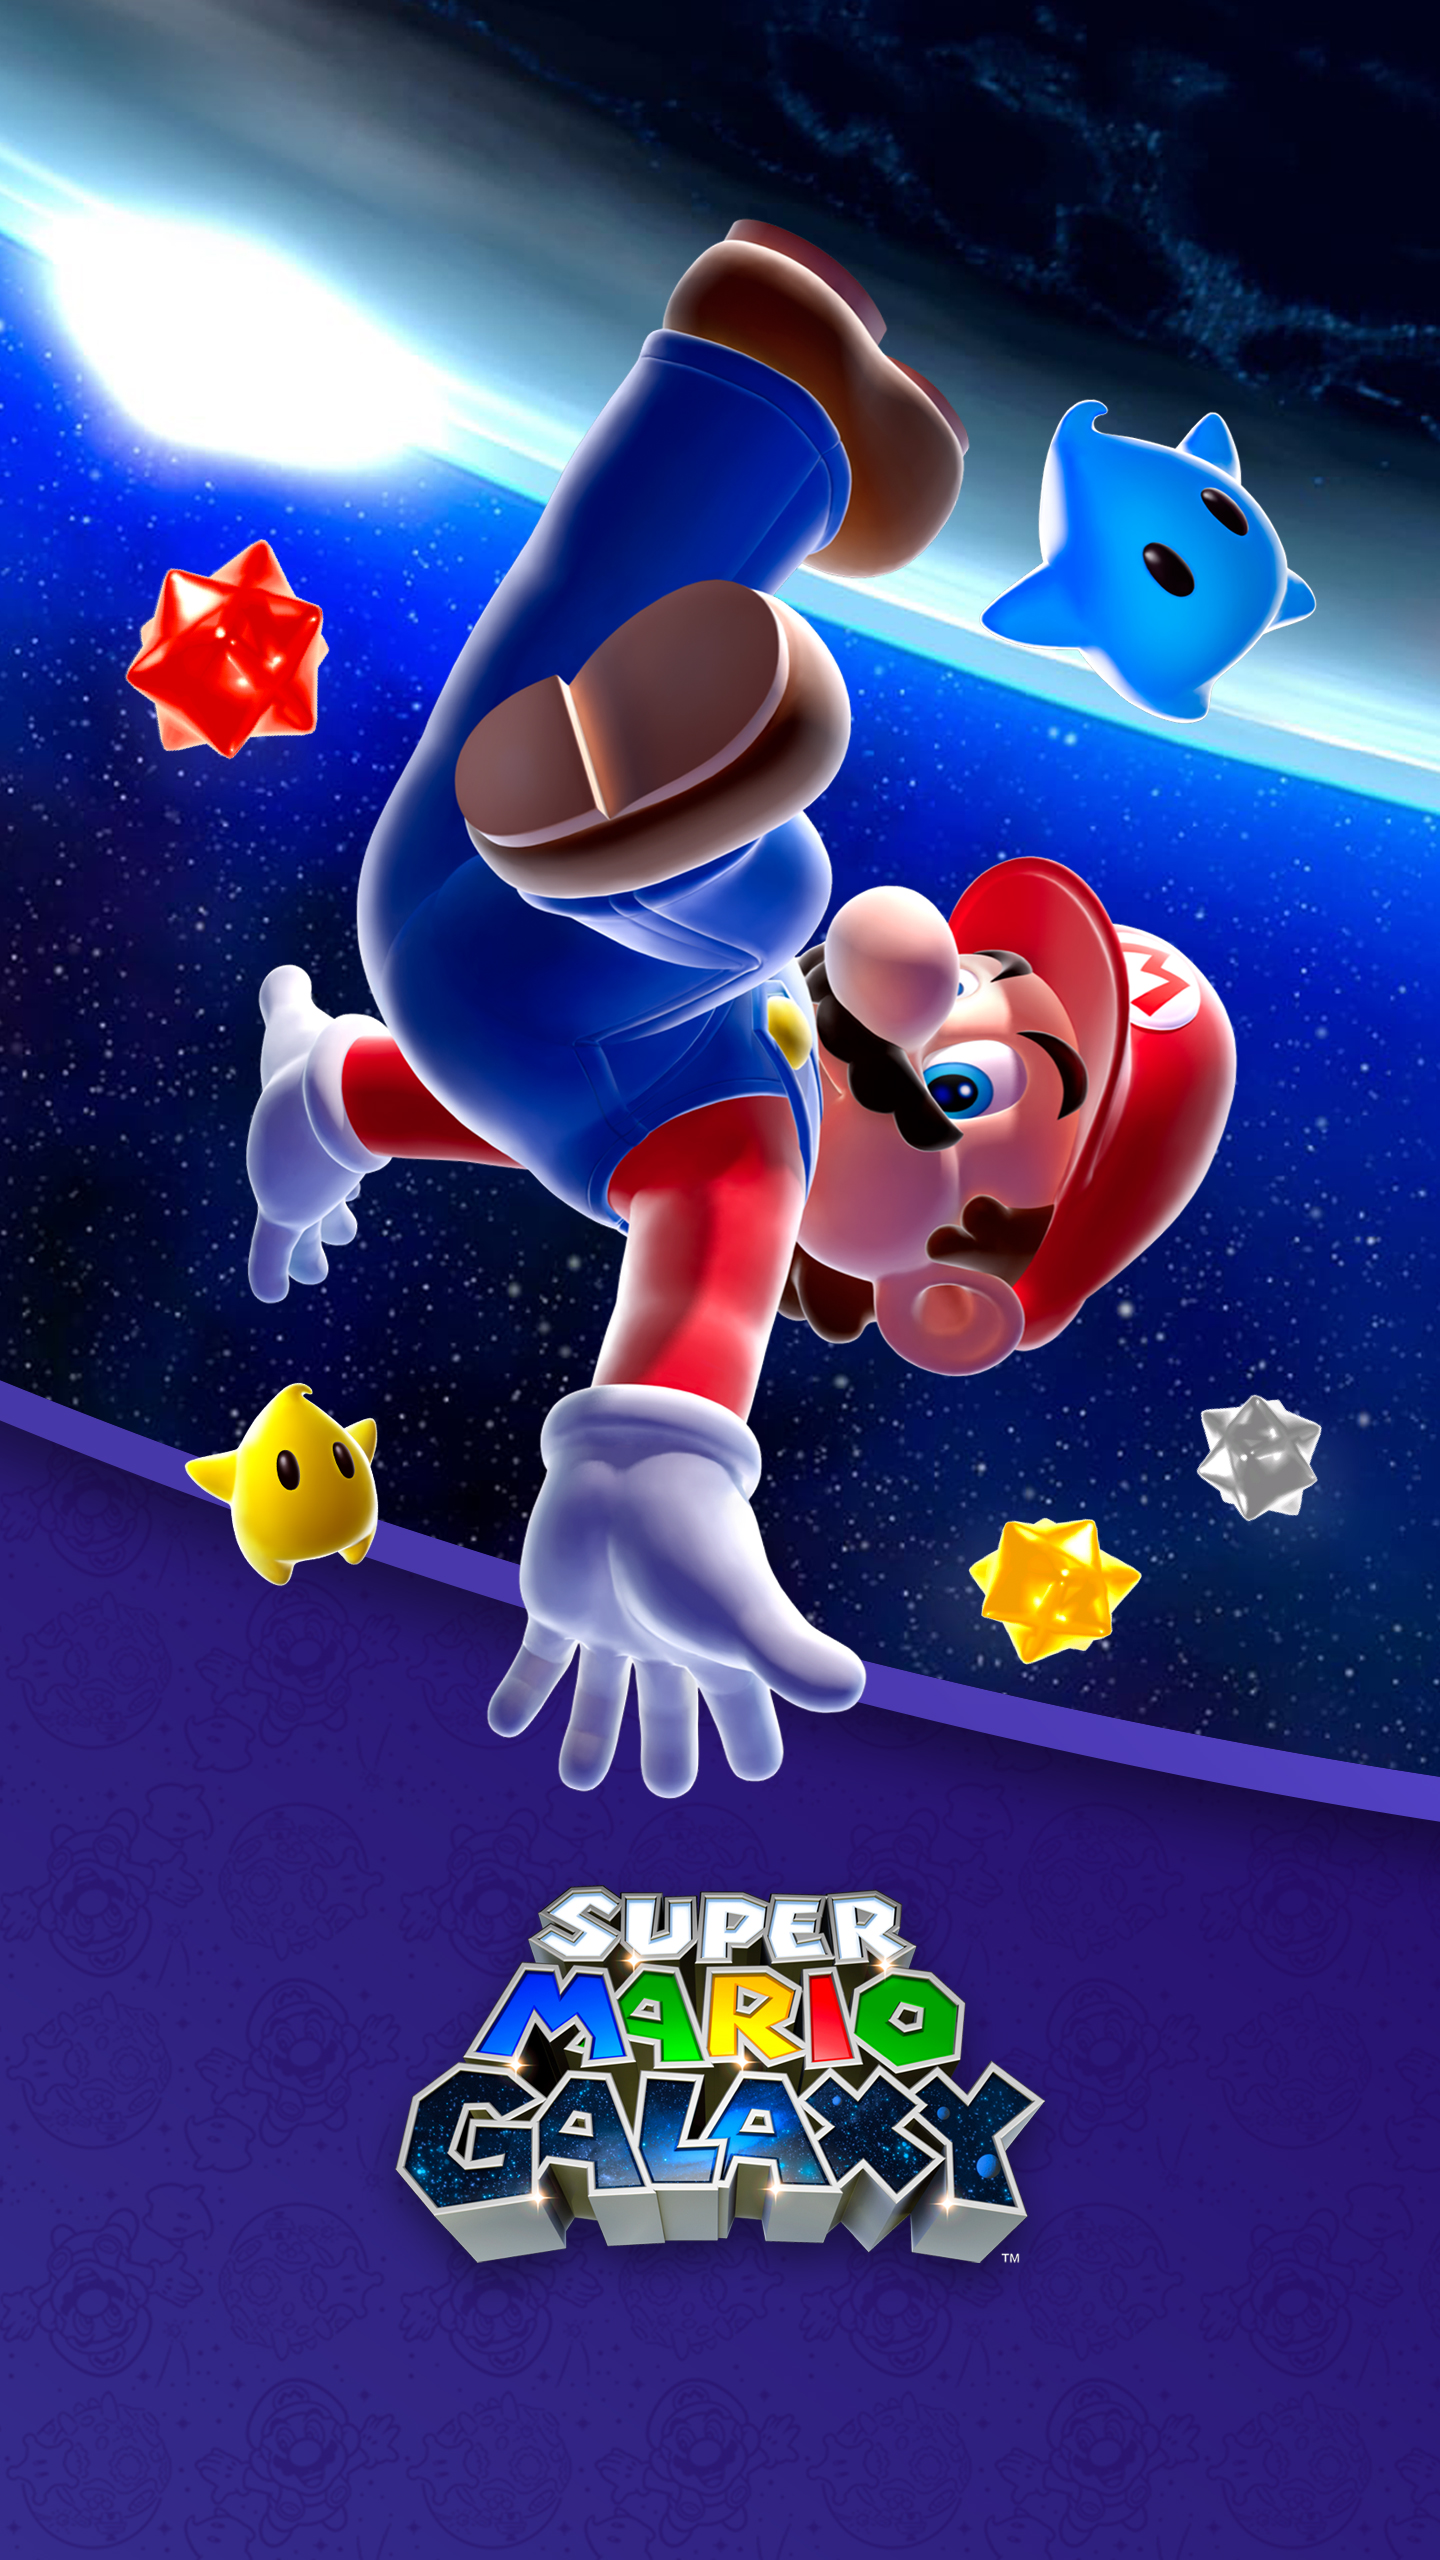 Super Mario 3D All-Stars - Super Mario Galaxy Wallpaper | Cat with Monocle